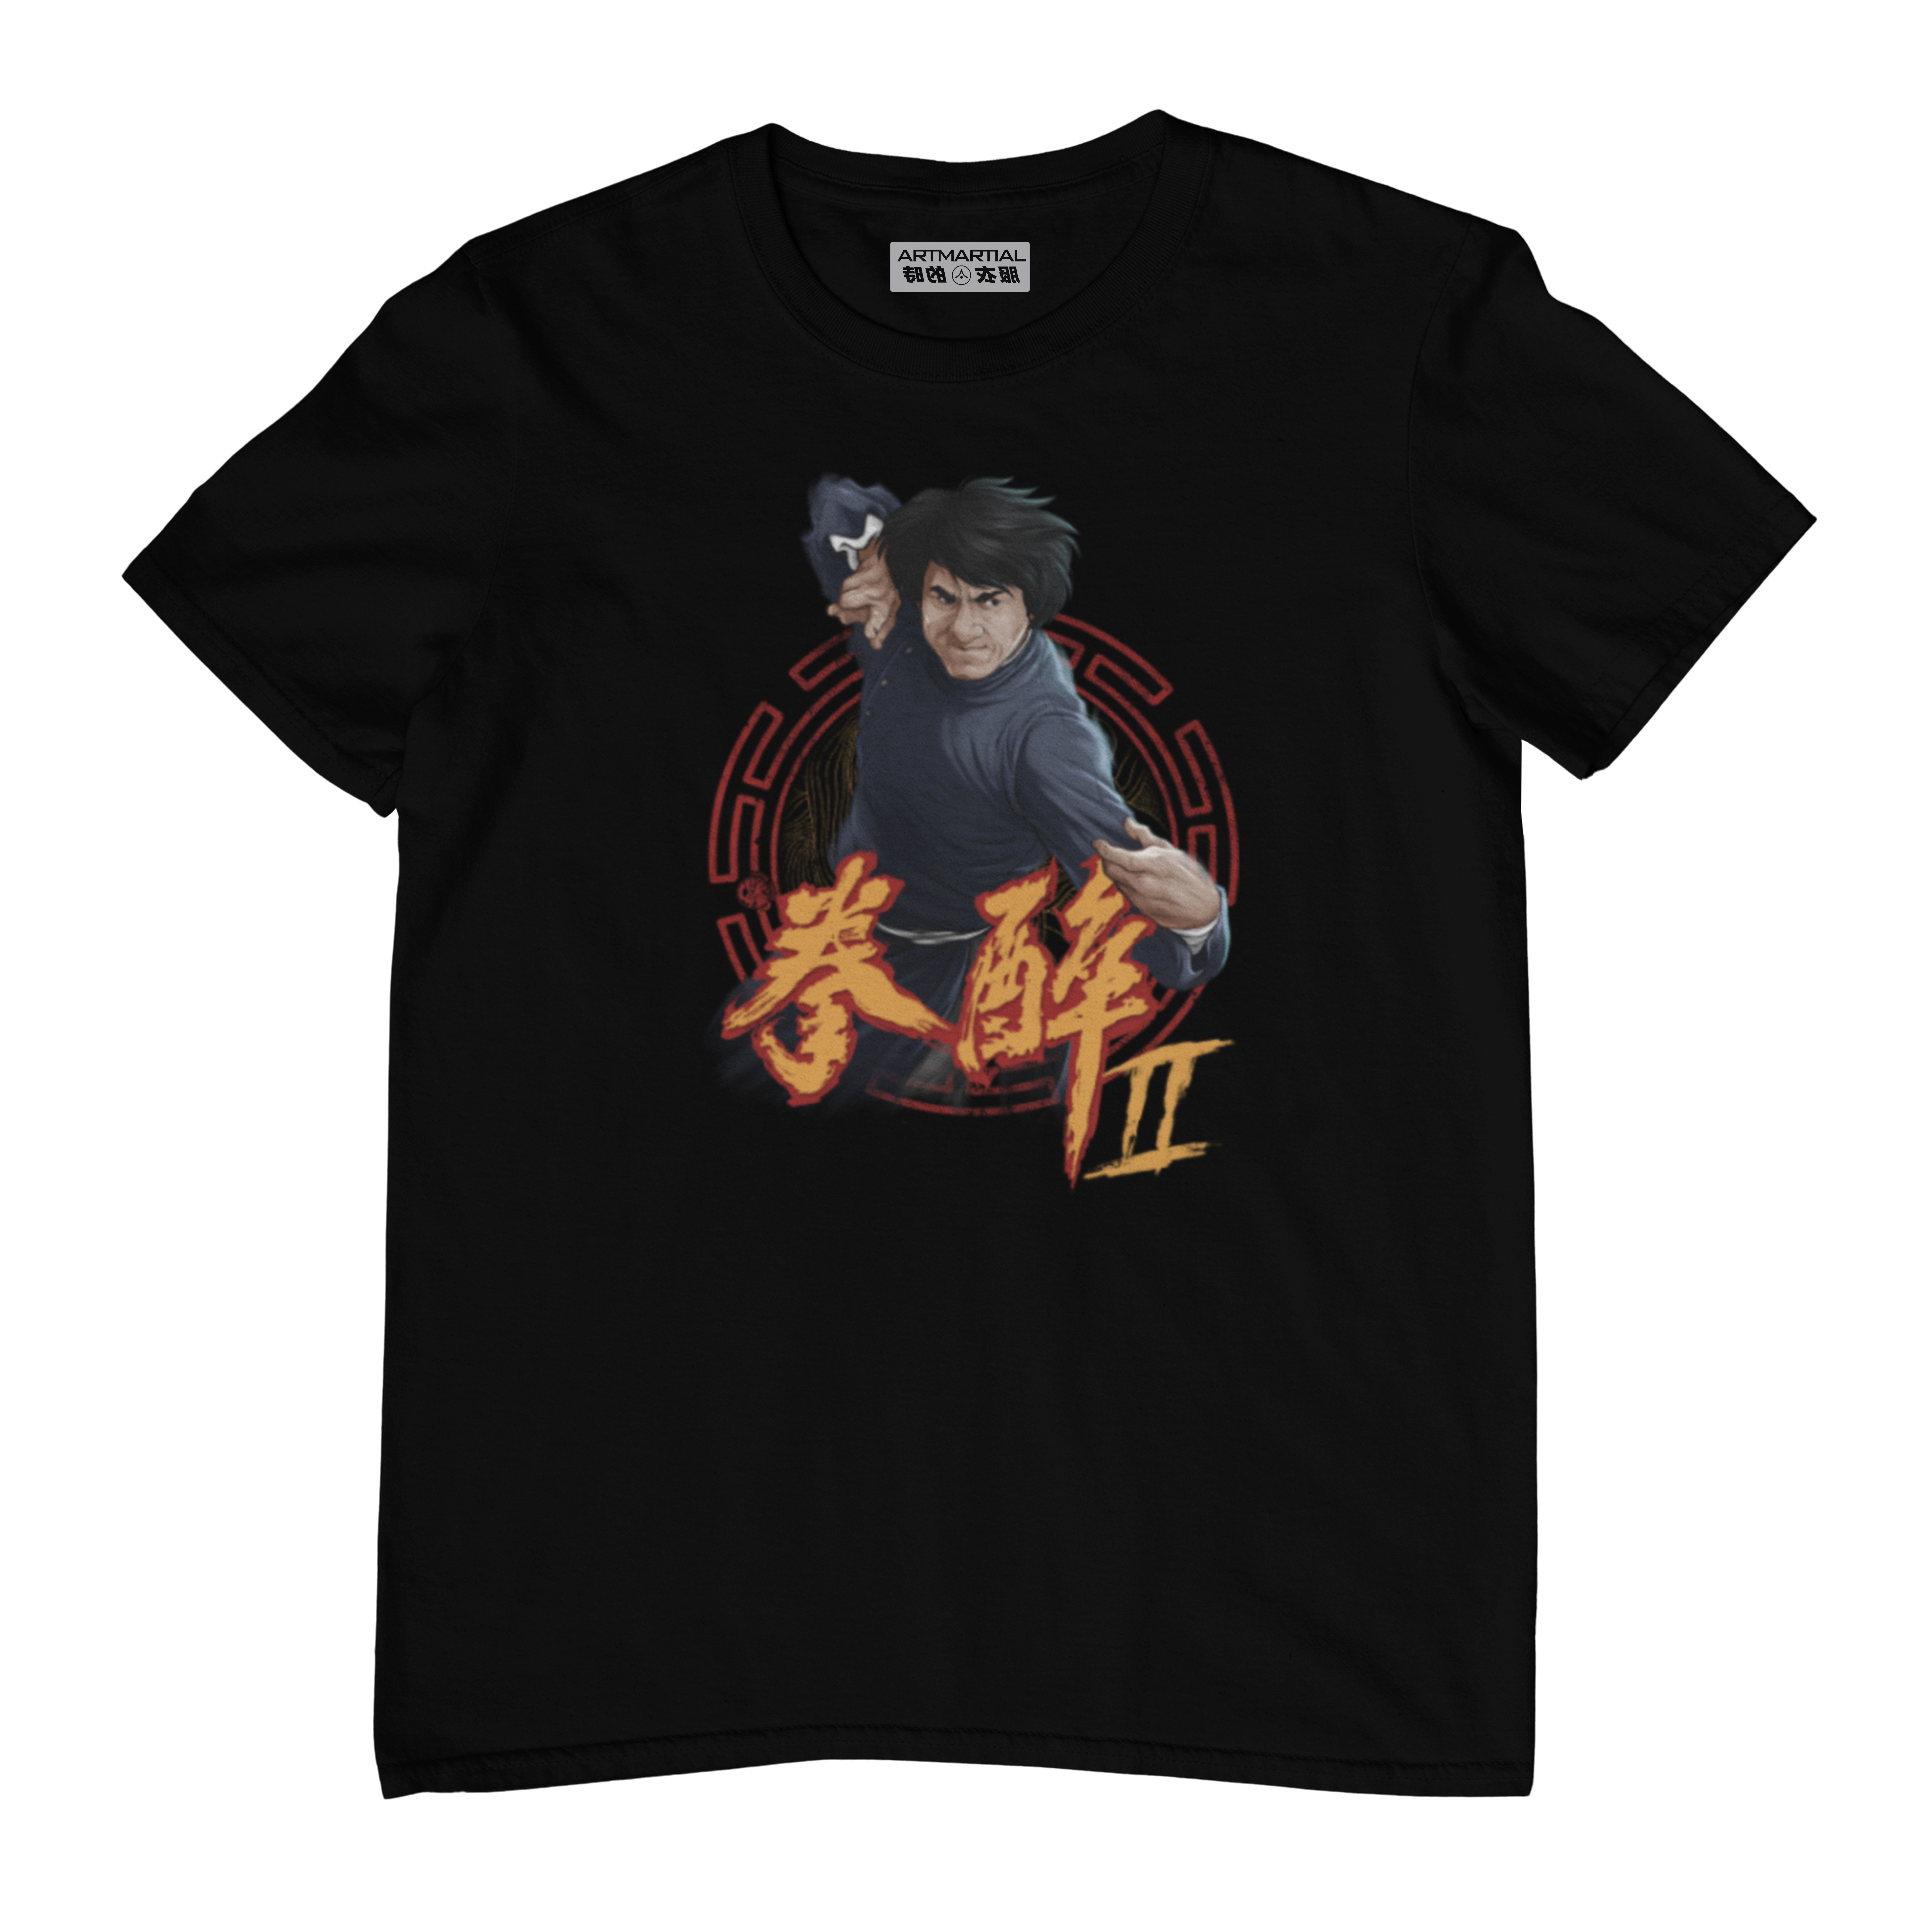 Jackie Chan DRUNKEN MASTER 2 design 1